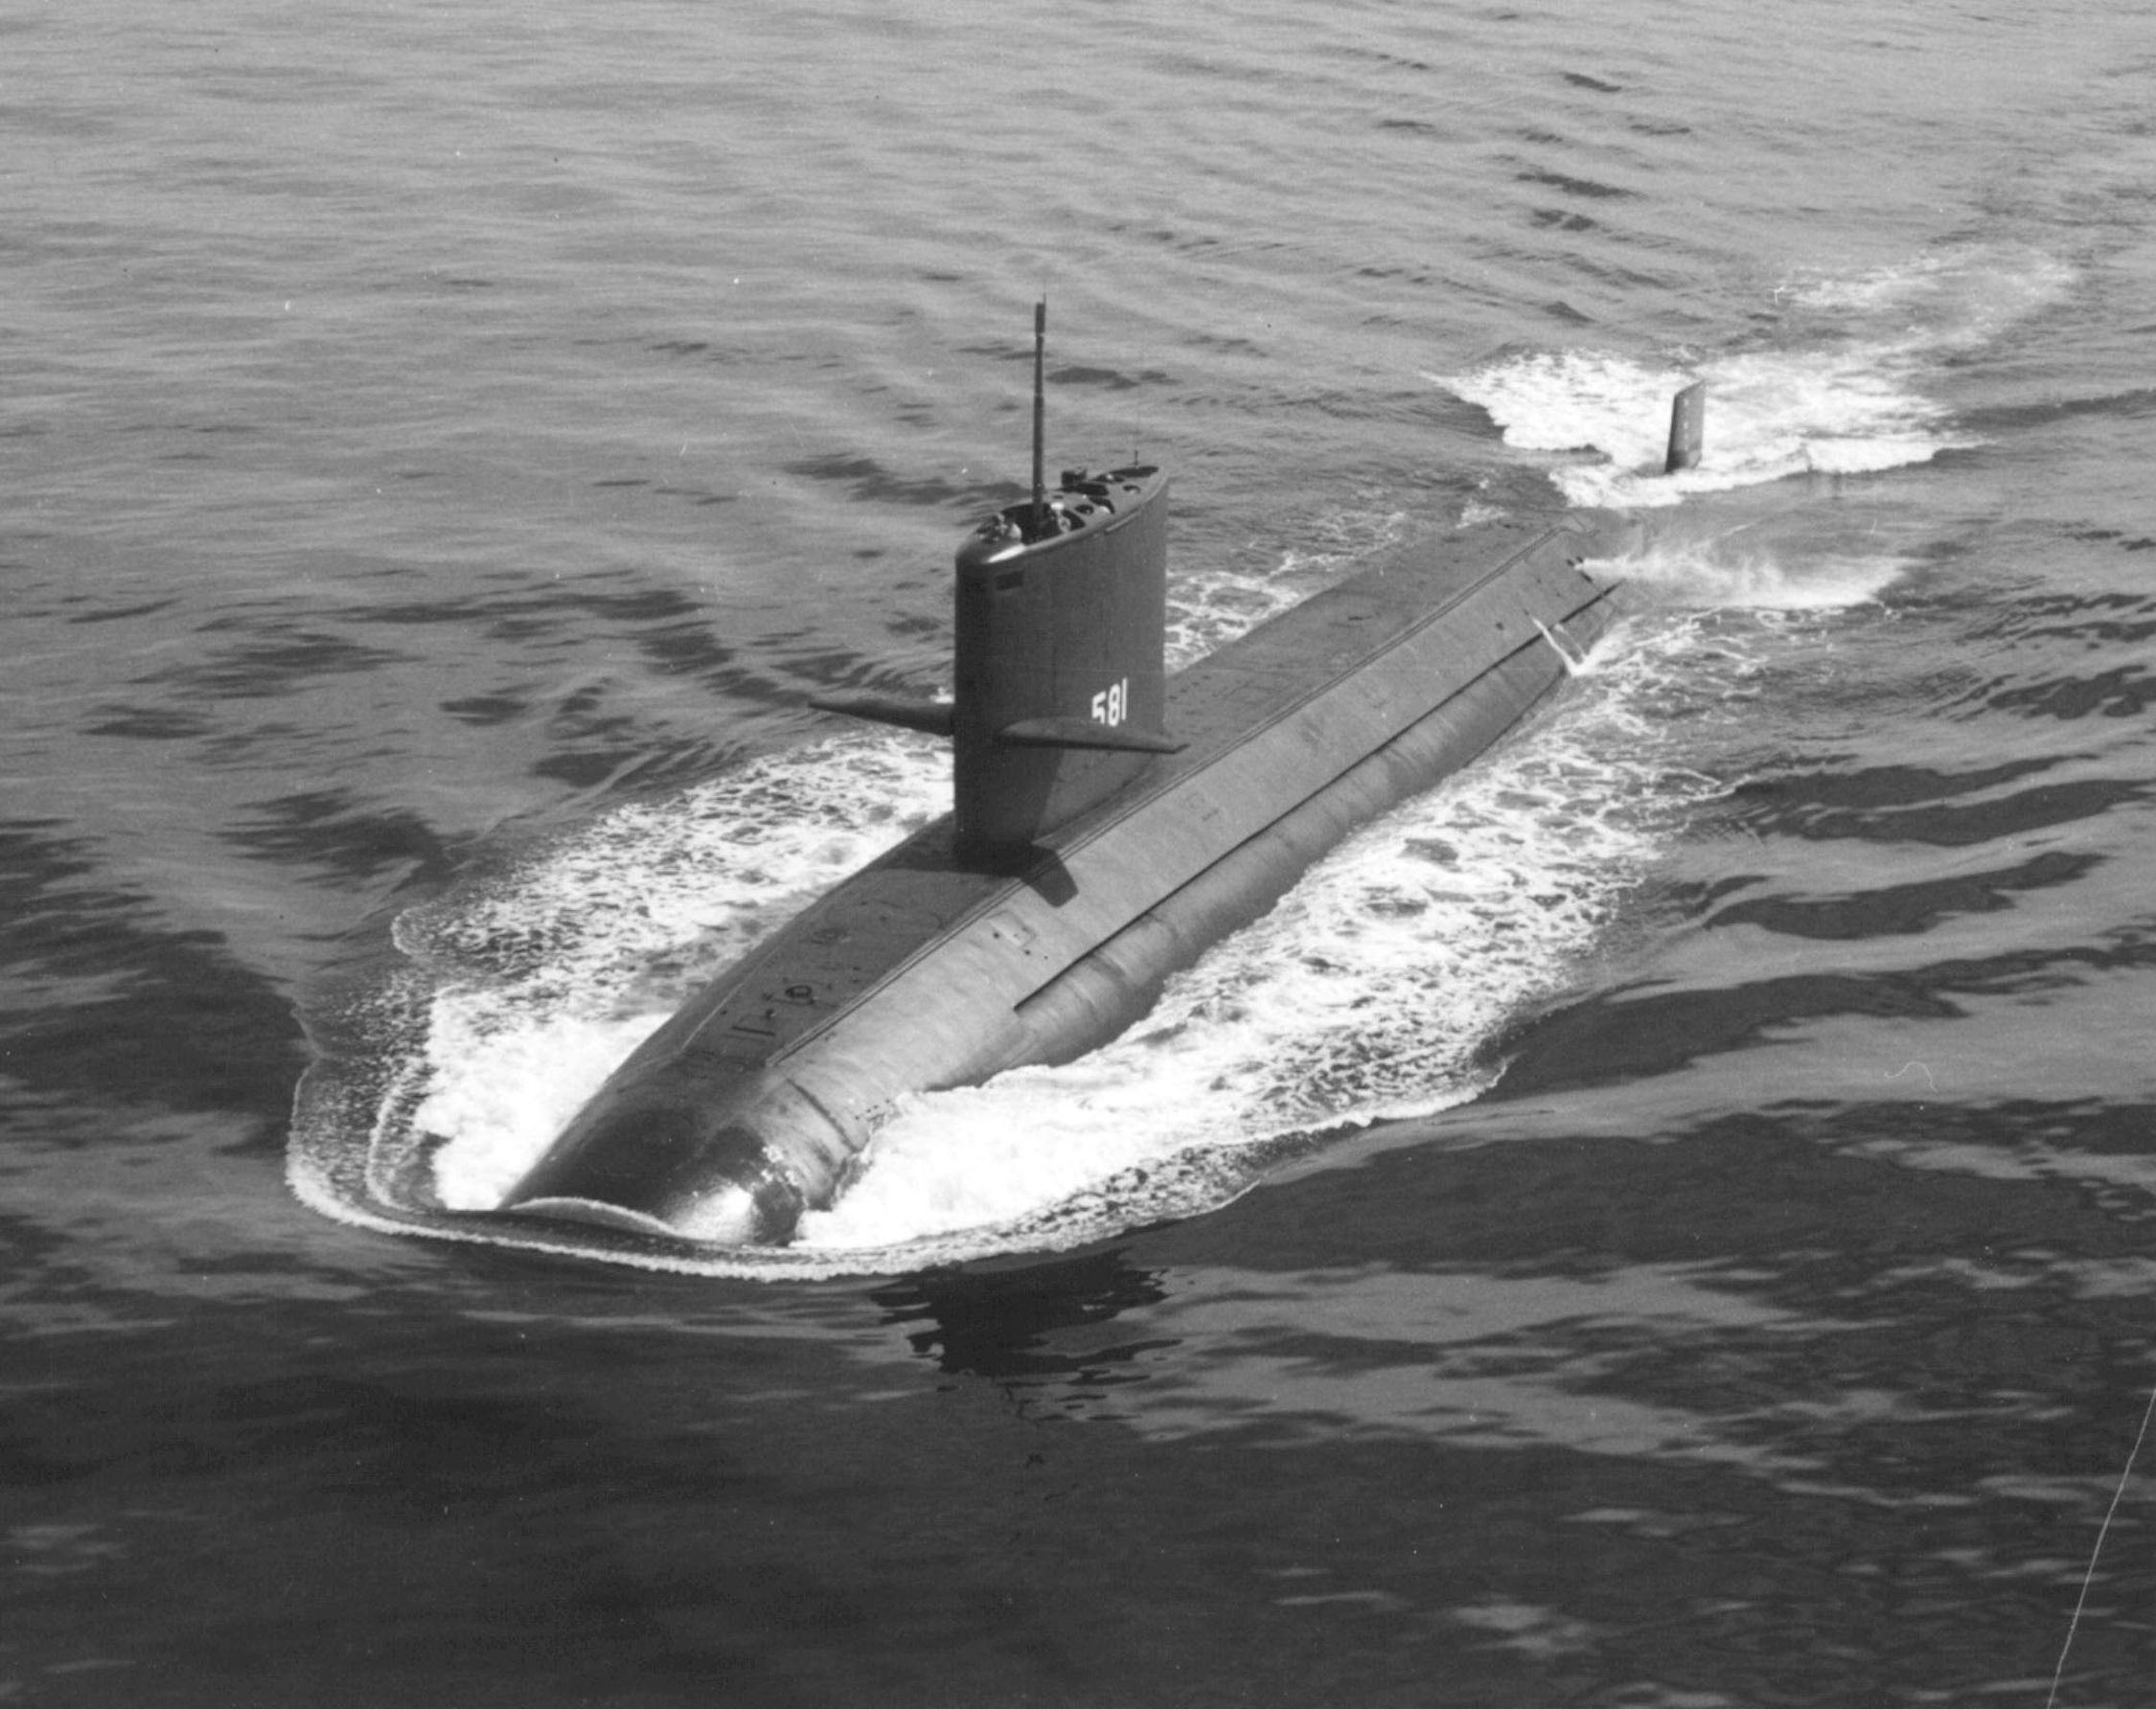 Vintage USS Blueback in action